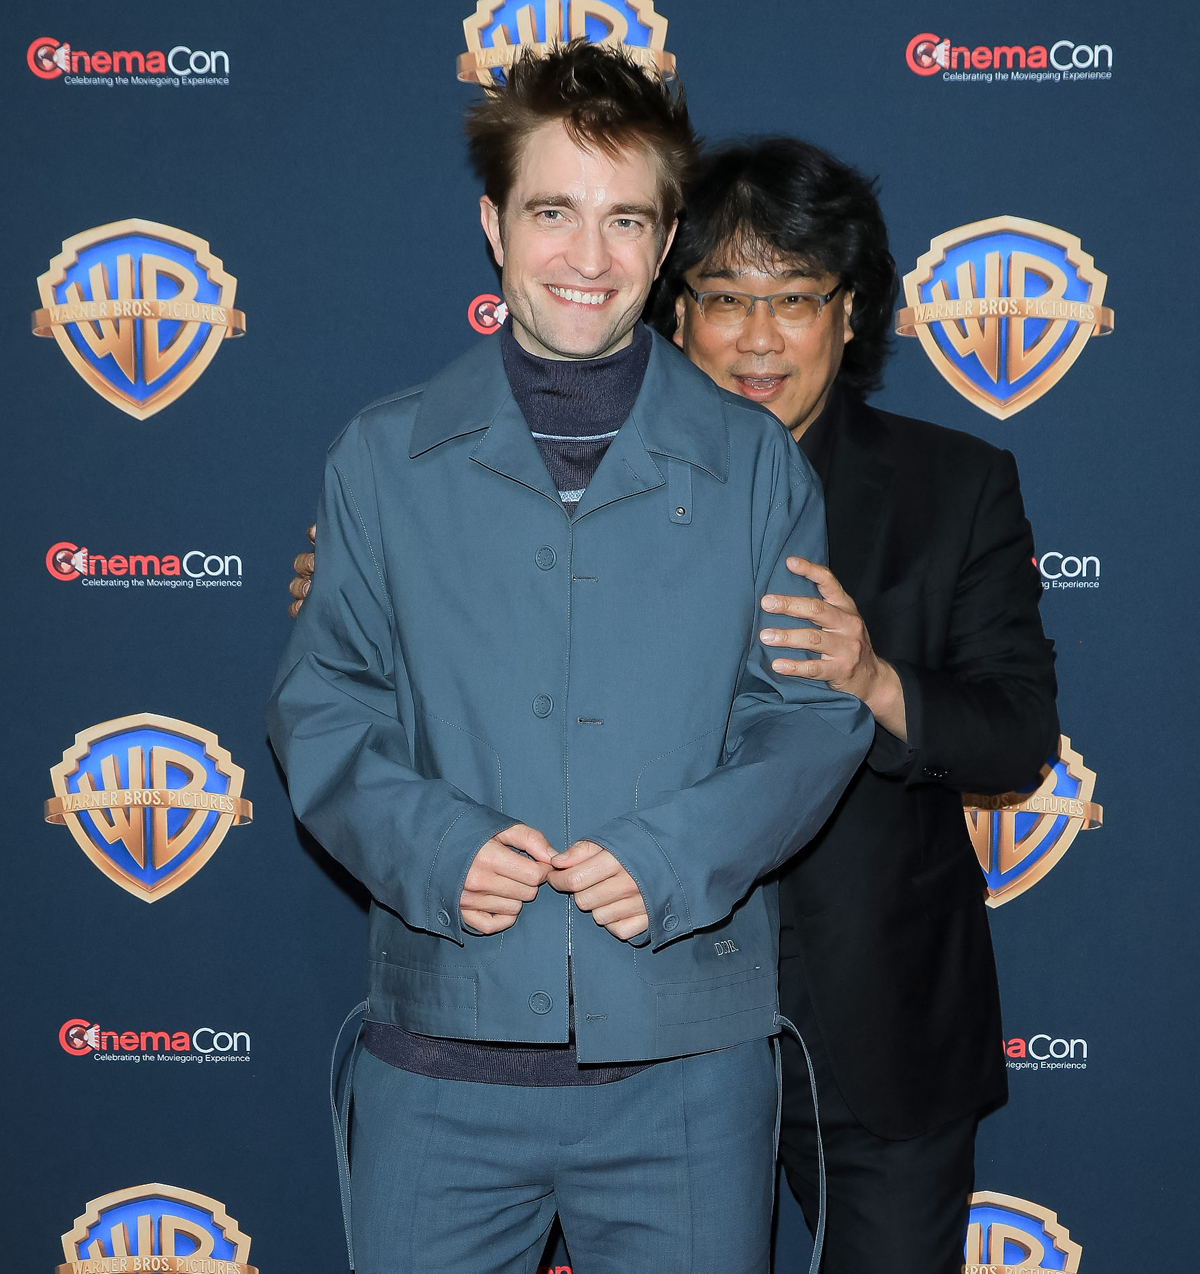 Robert Pattinson smiling at CinemaCon with director Bong Joon Ho